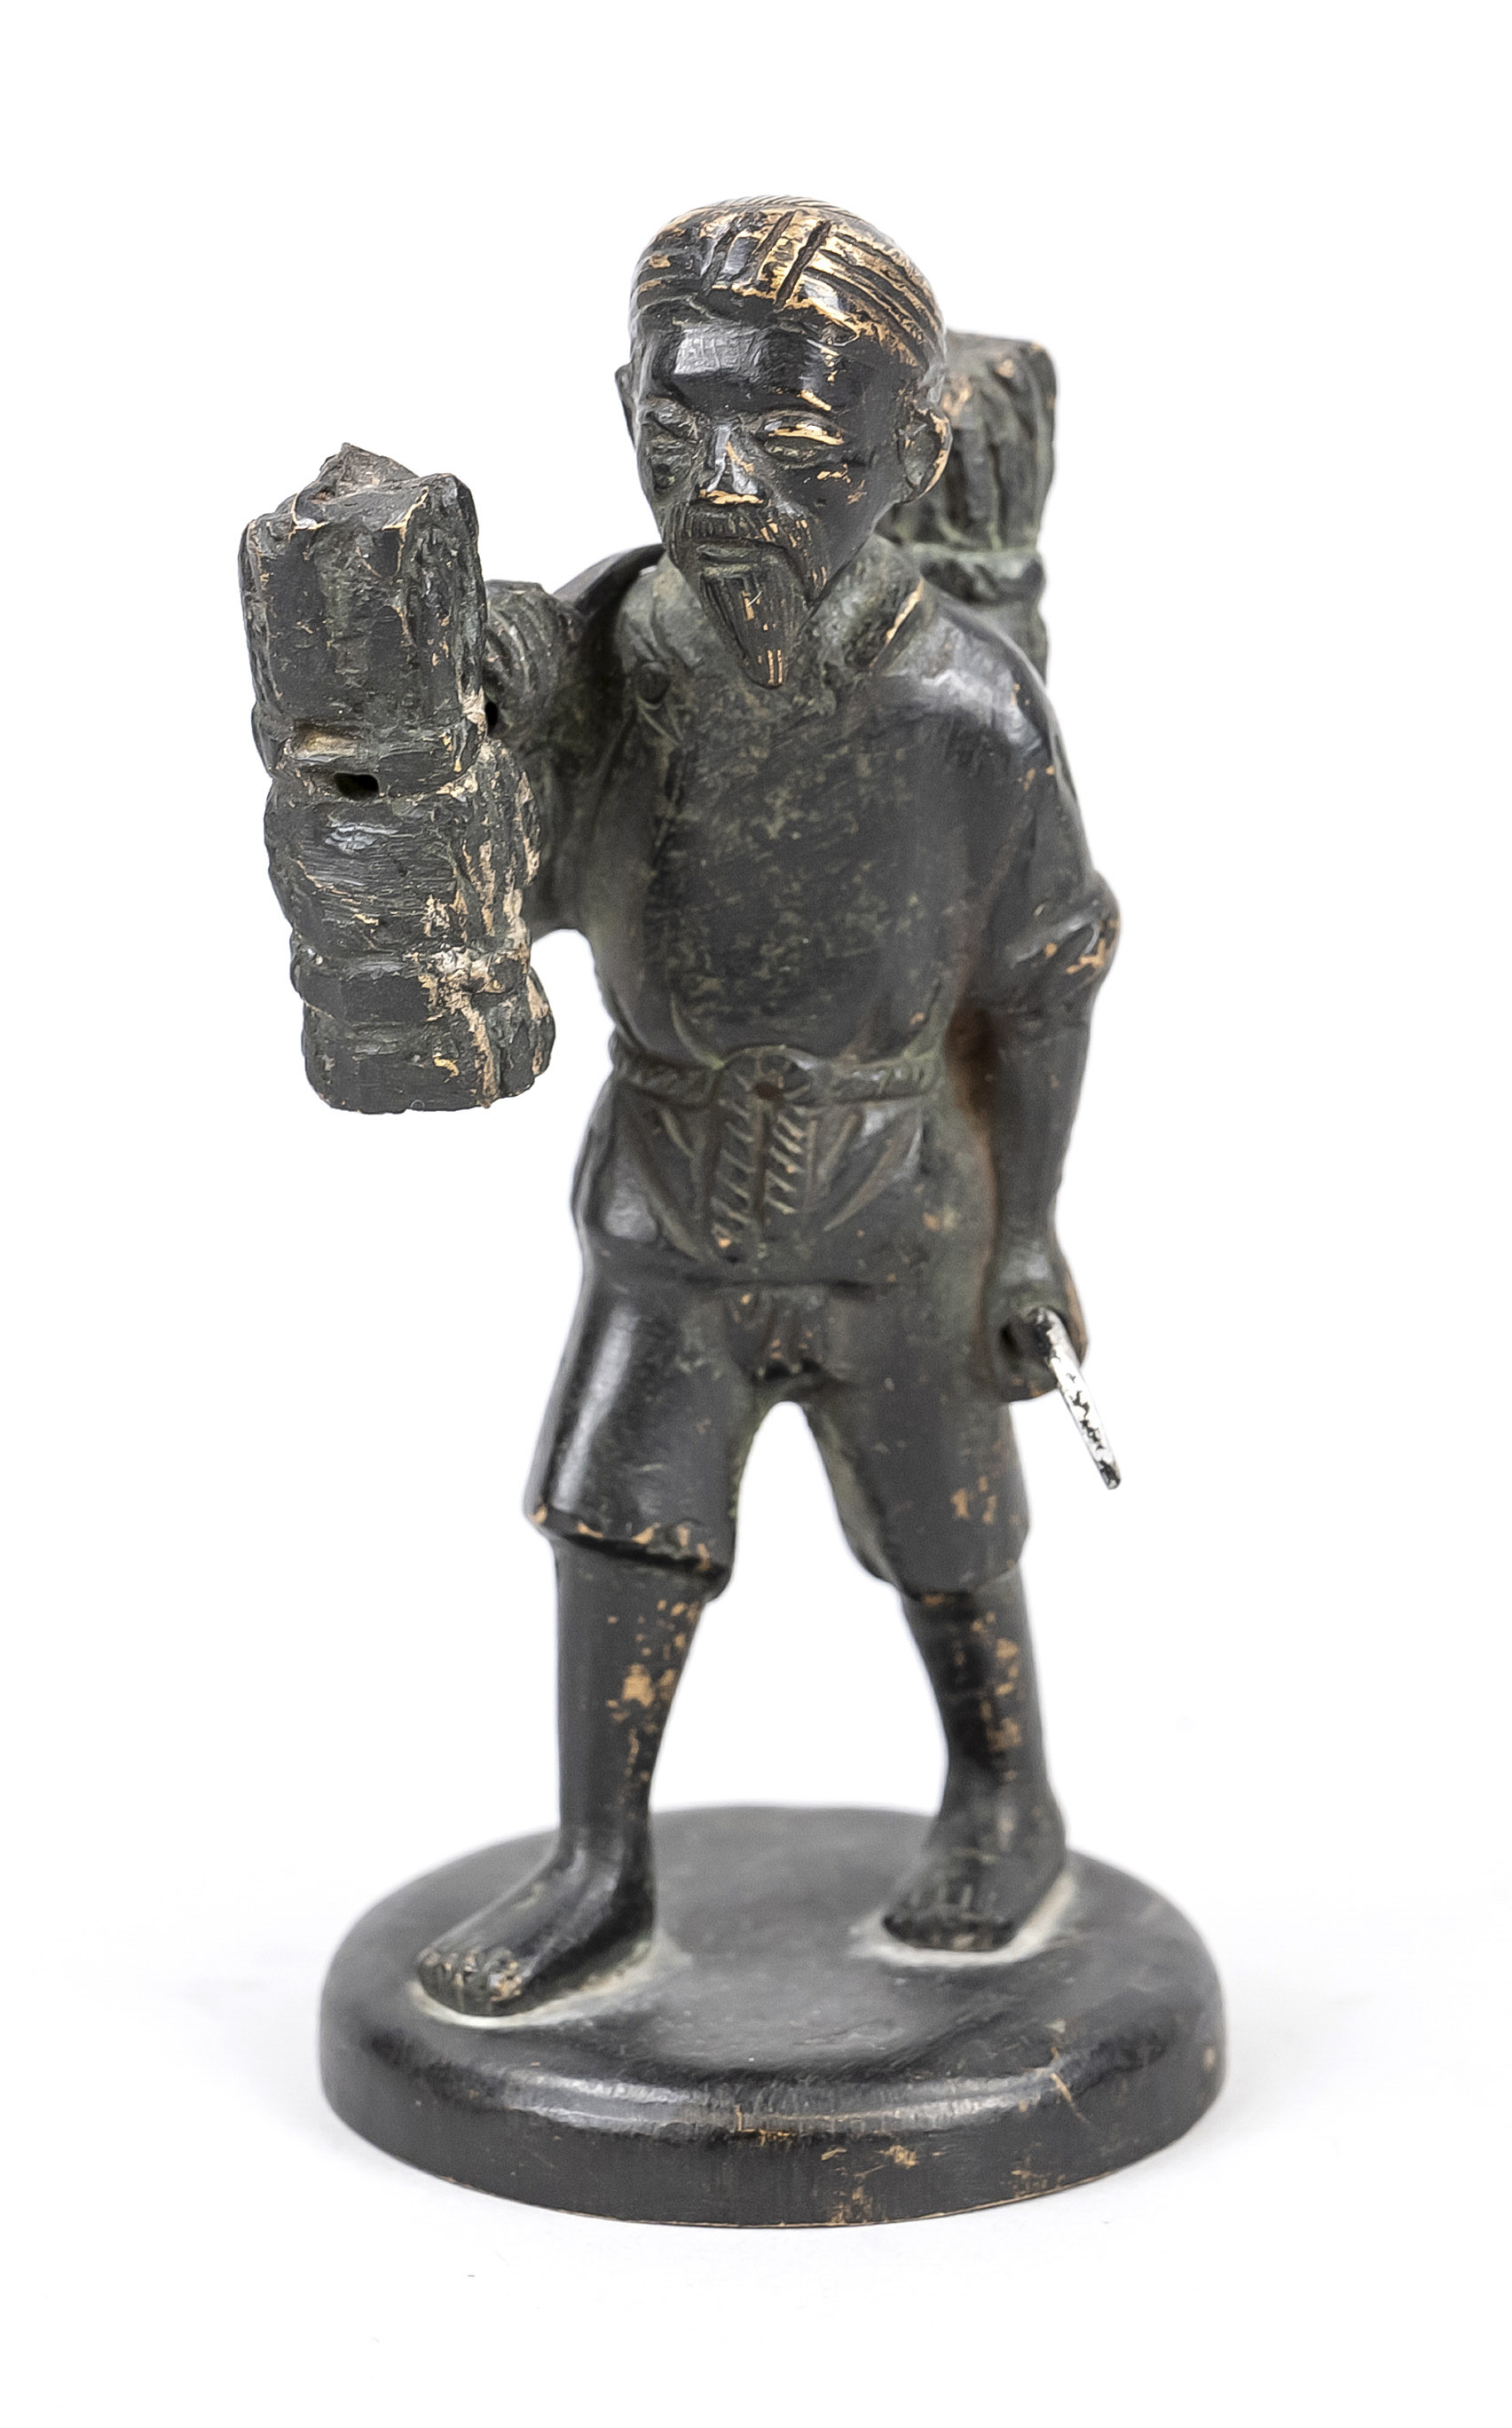 Farmer figurine, Japan, c. 1900, bronze, farmer with sickle and bundles of grain, h 12cm